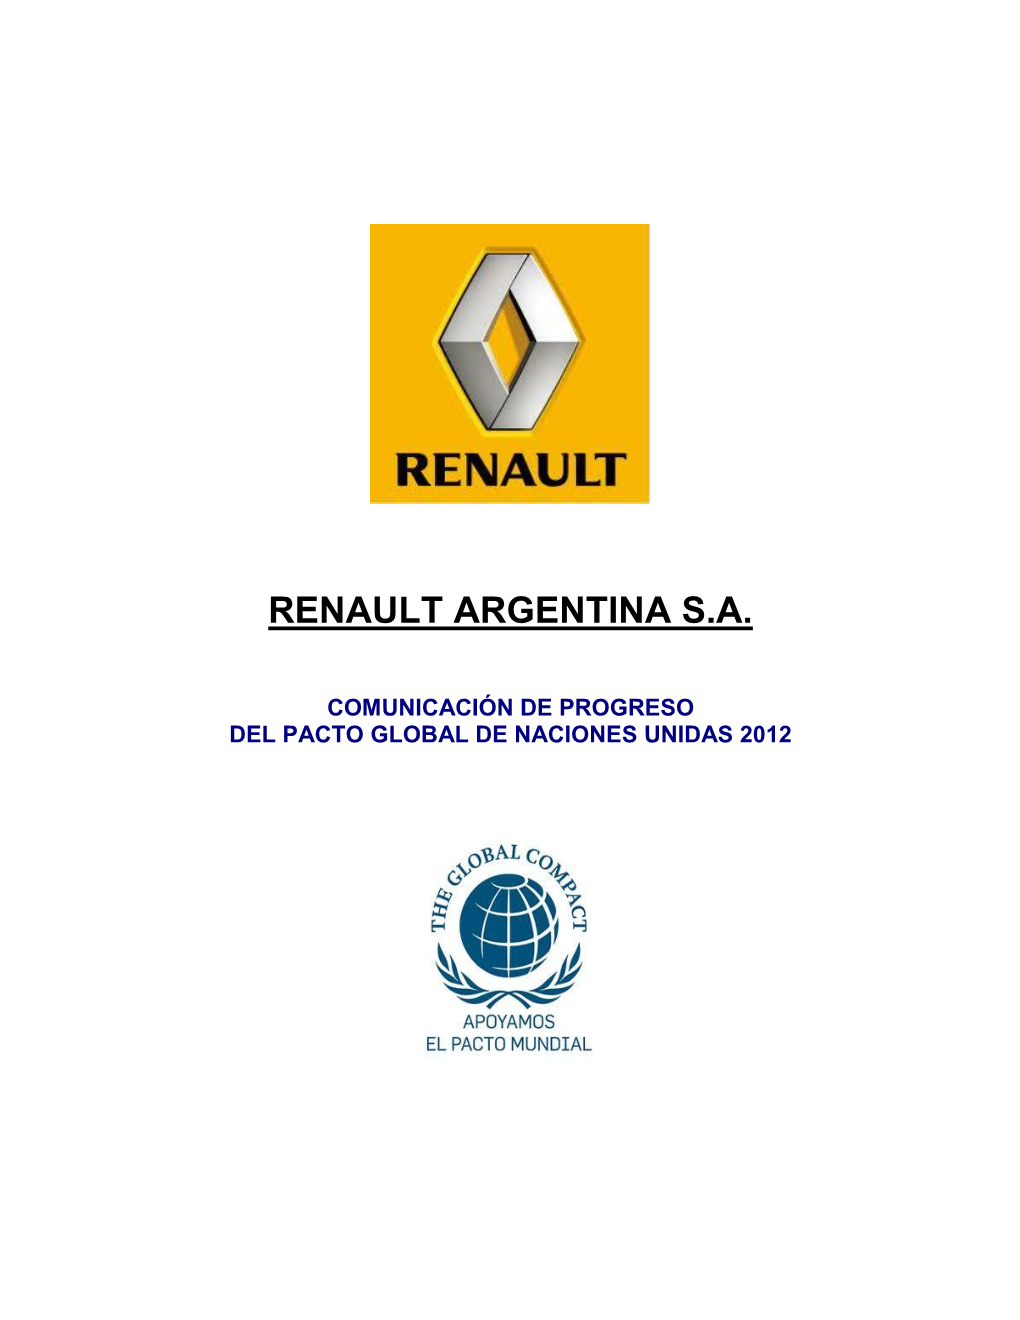 Renault Argentina S.A